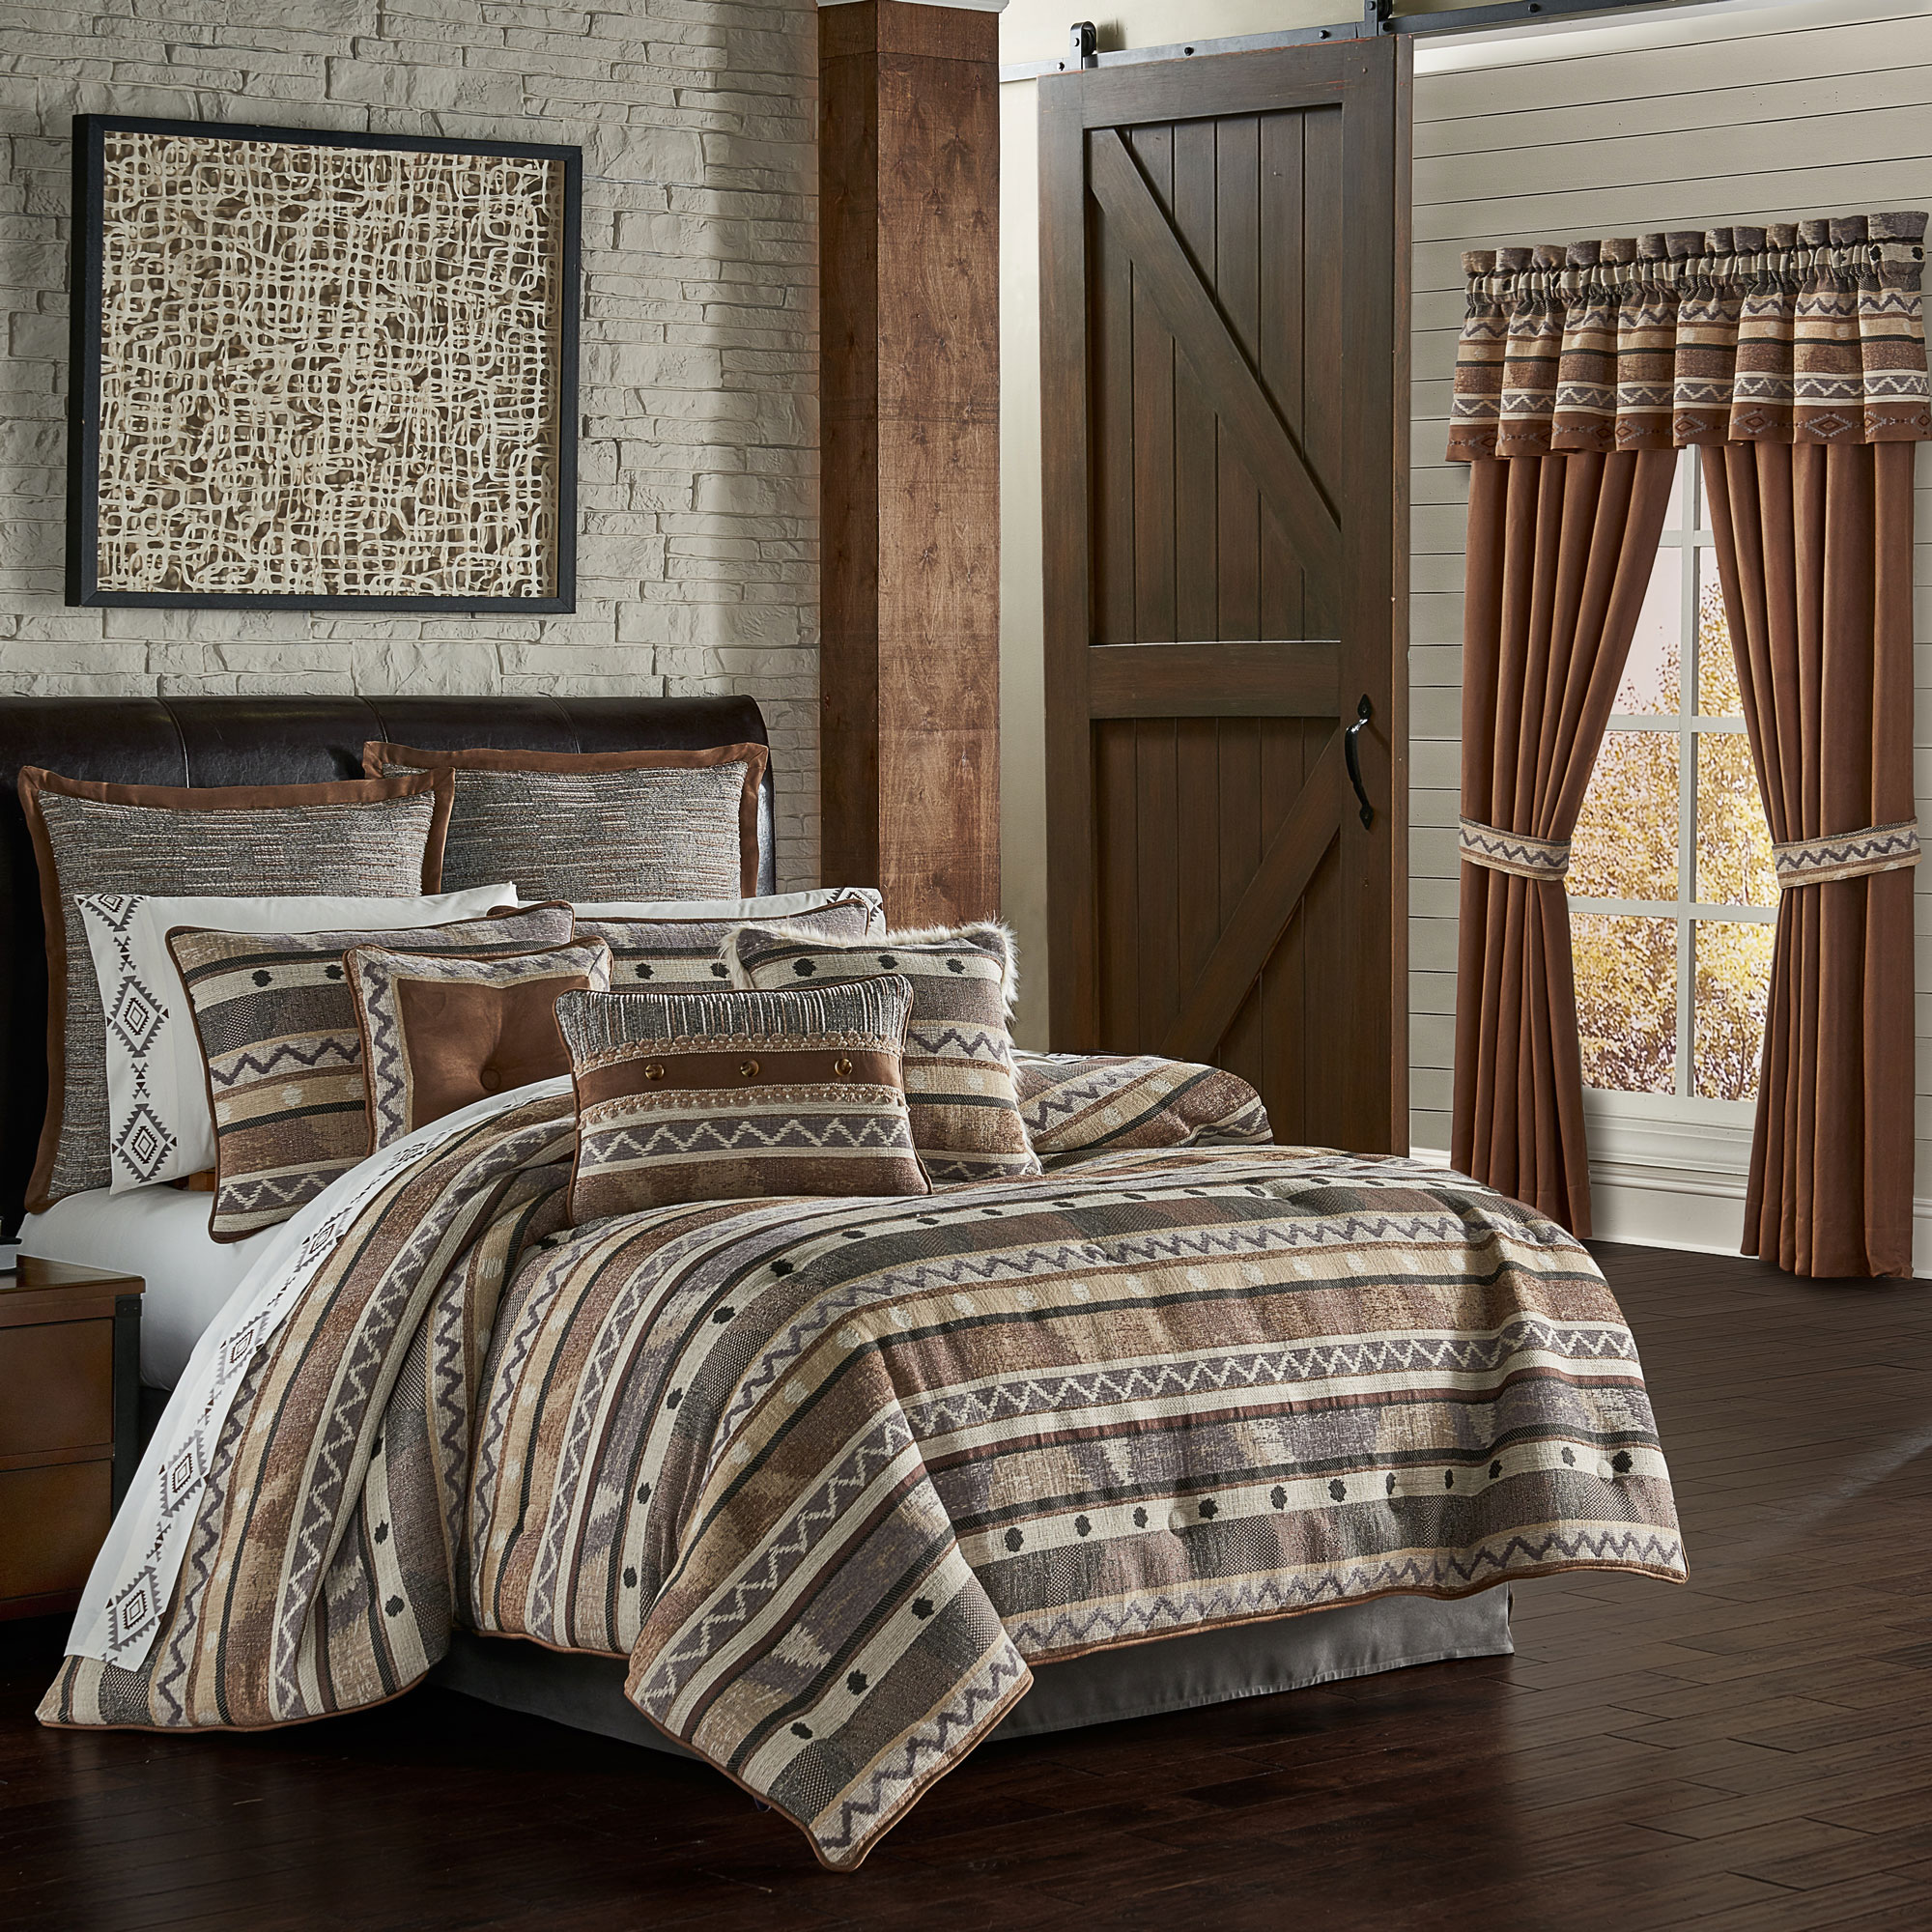 Timber California King 4 Piece Comforter Set in Linen California King | 100% Cotton by J.Queen New York